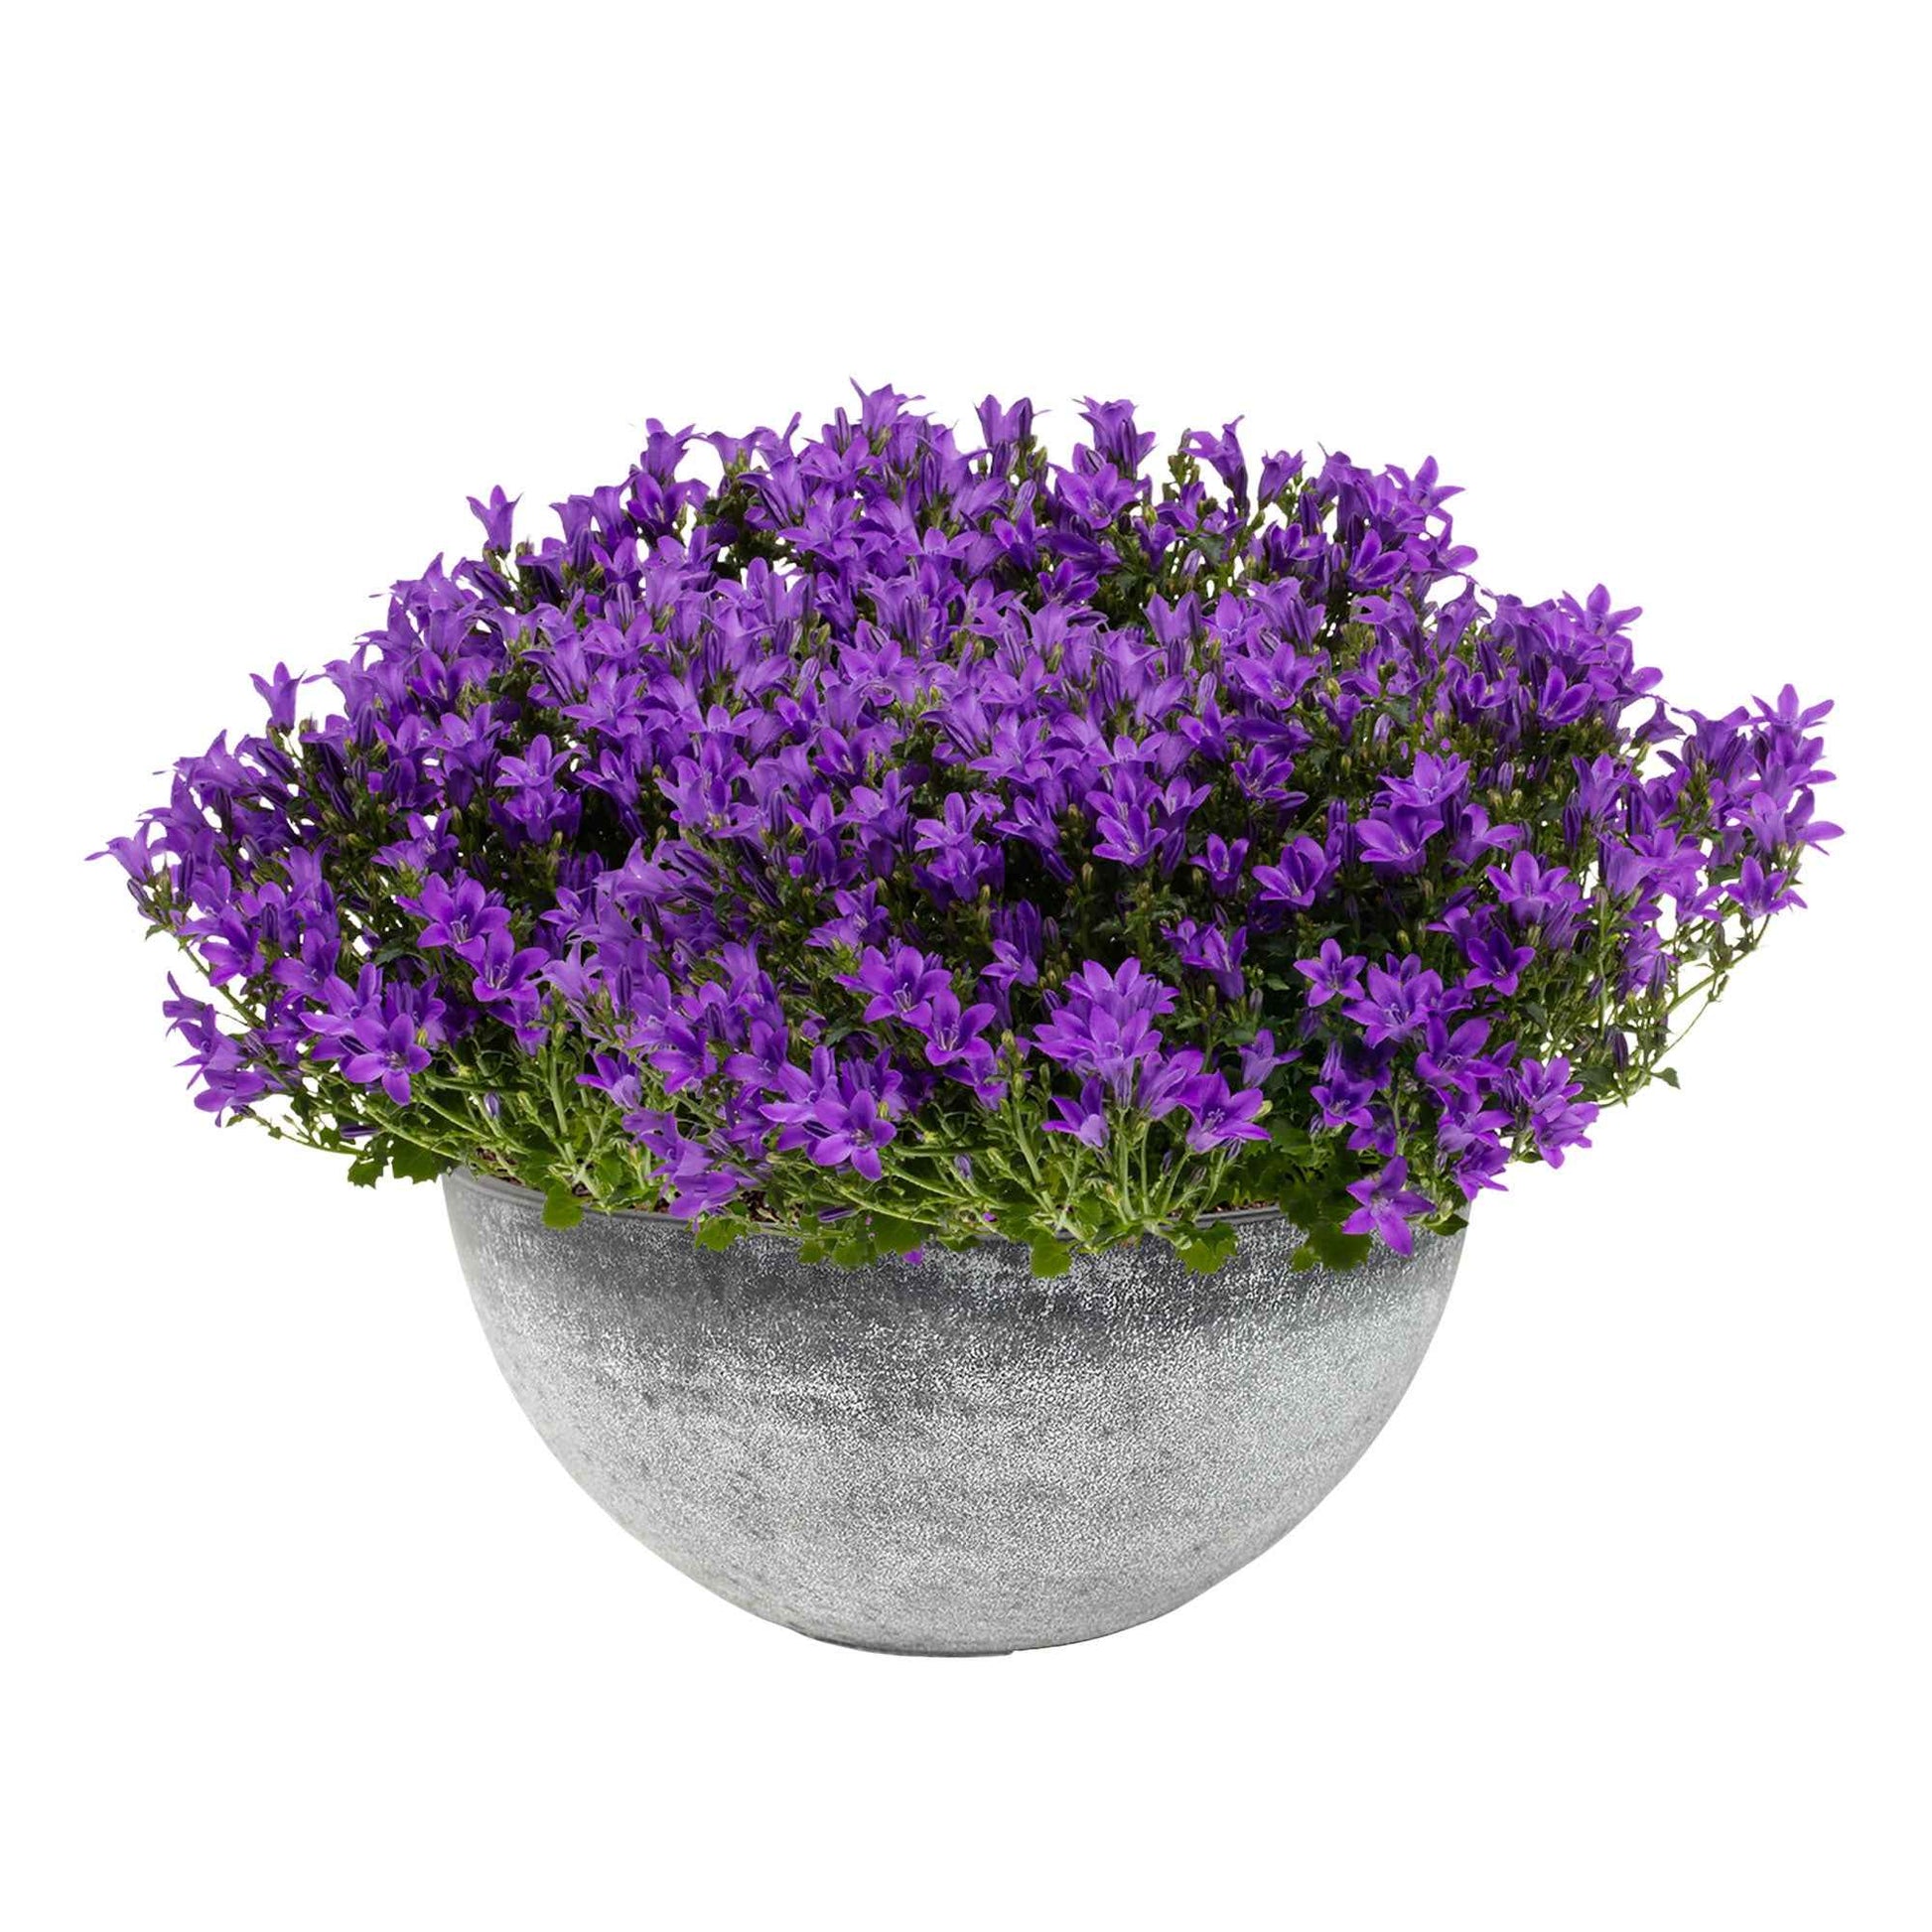 3x Klokjesbloem Campanula 'Ambella Intense Purple' paars incl. schaal grijs - Alle vaste tuinplanten